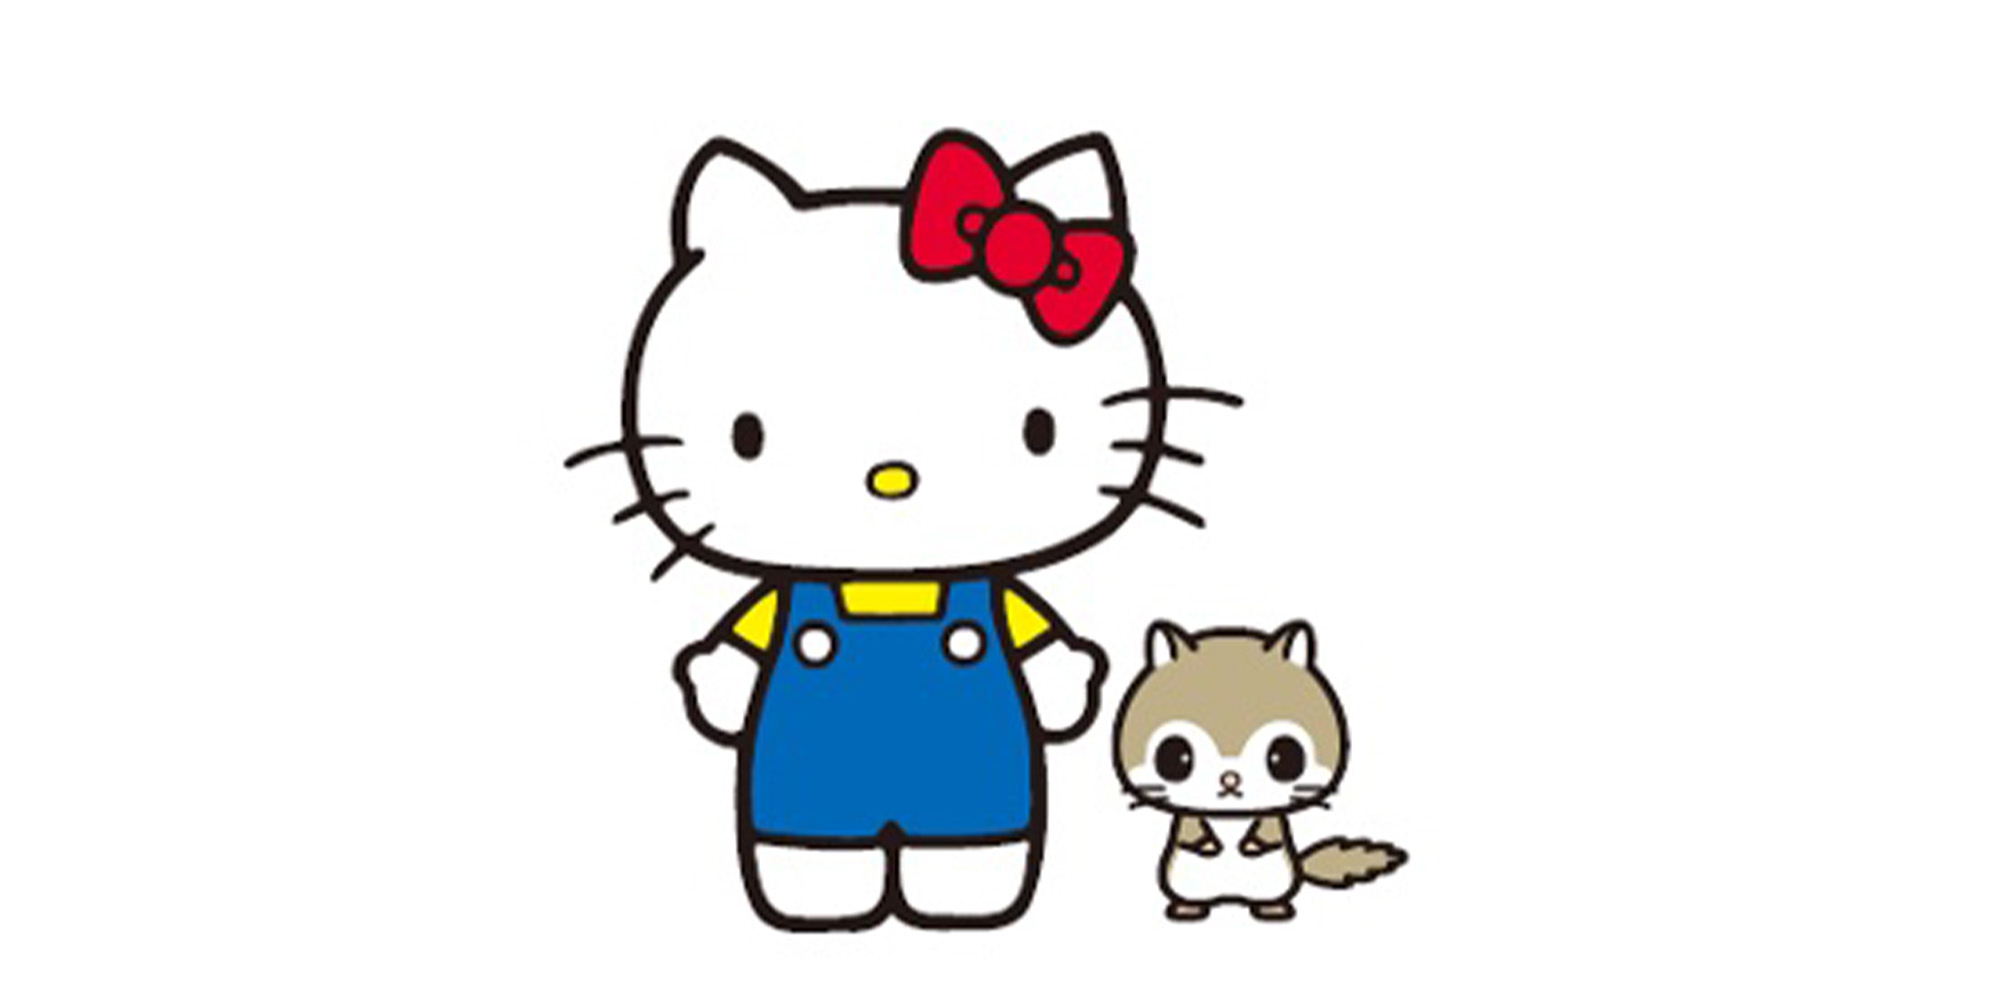 Sanrio® Creates Its Own Immersive World - My Hello Kitty Cafe on